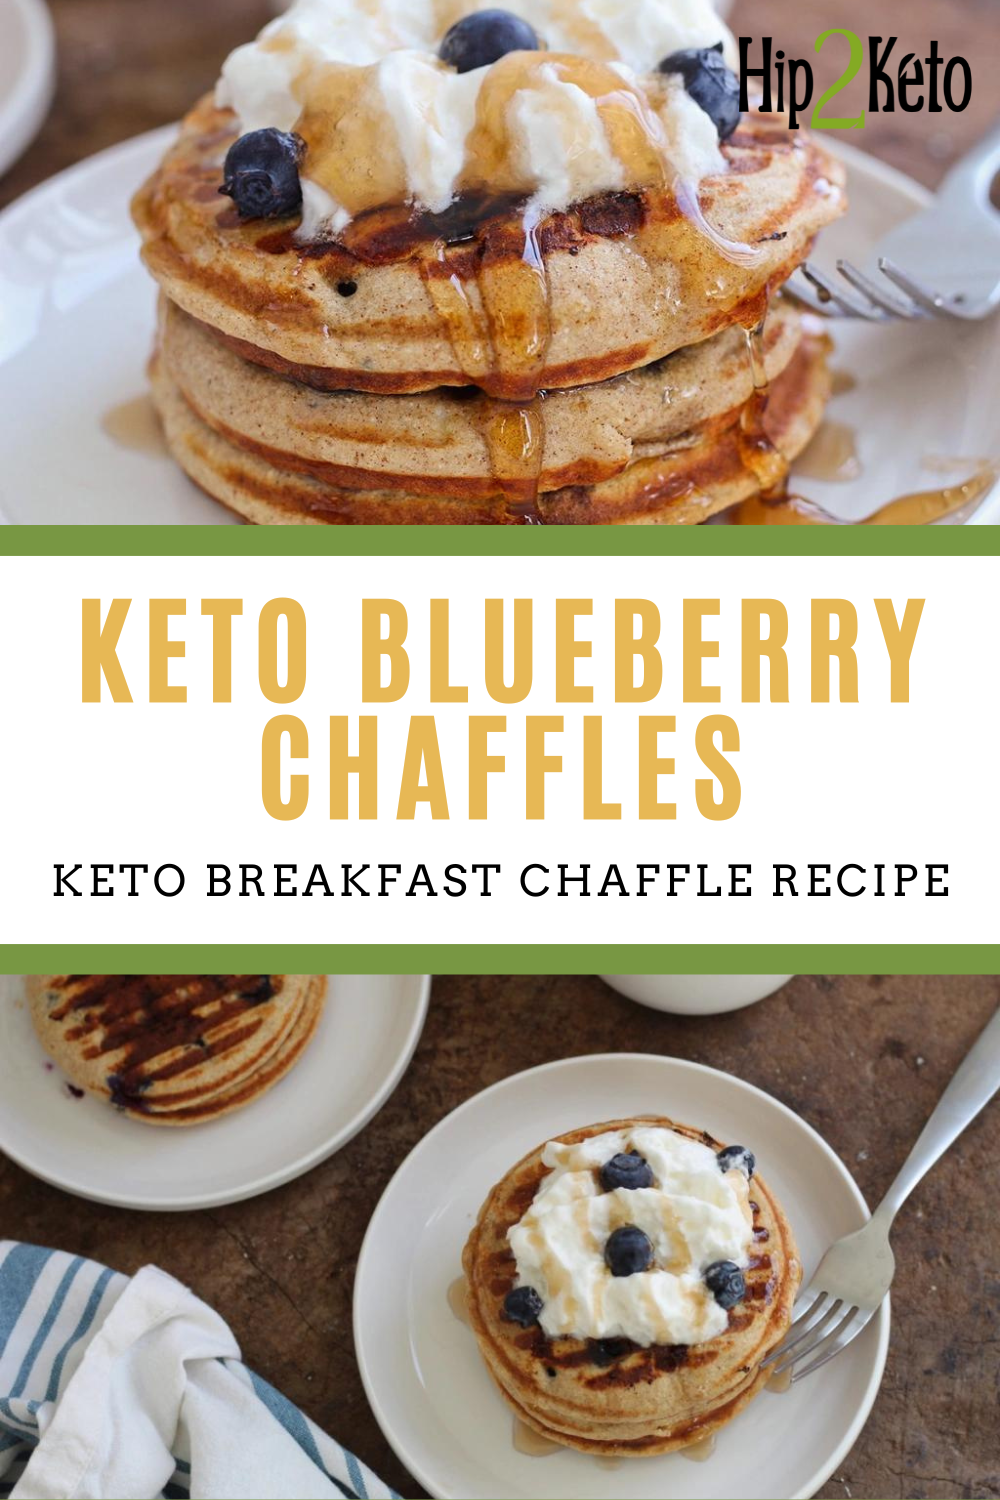 Add Keto Blueberry Chaffles to Your Breakfast Menu | Hip2Keto